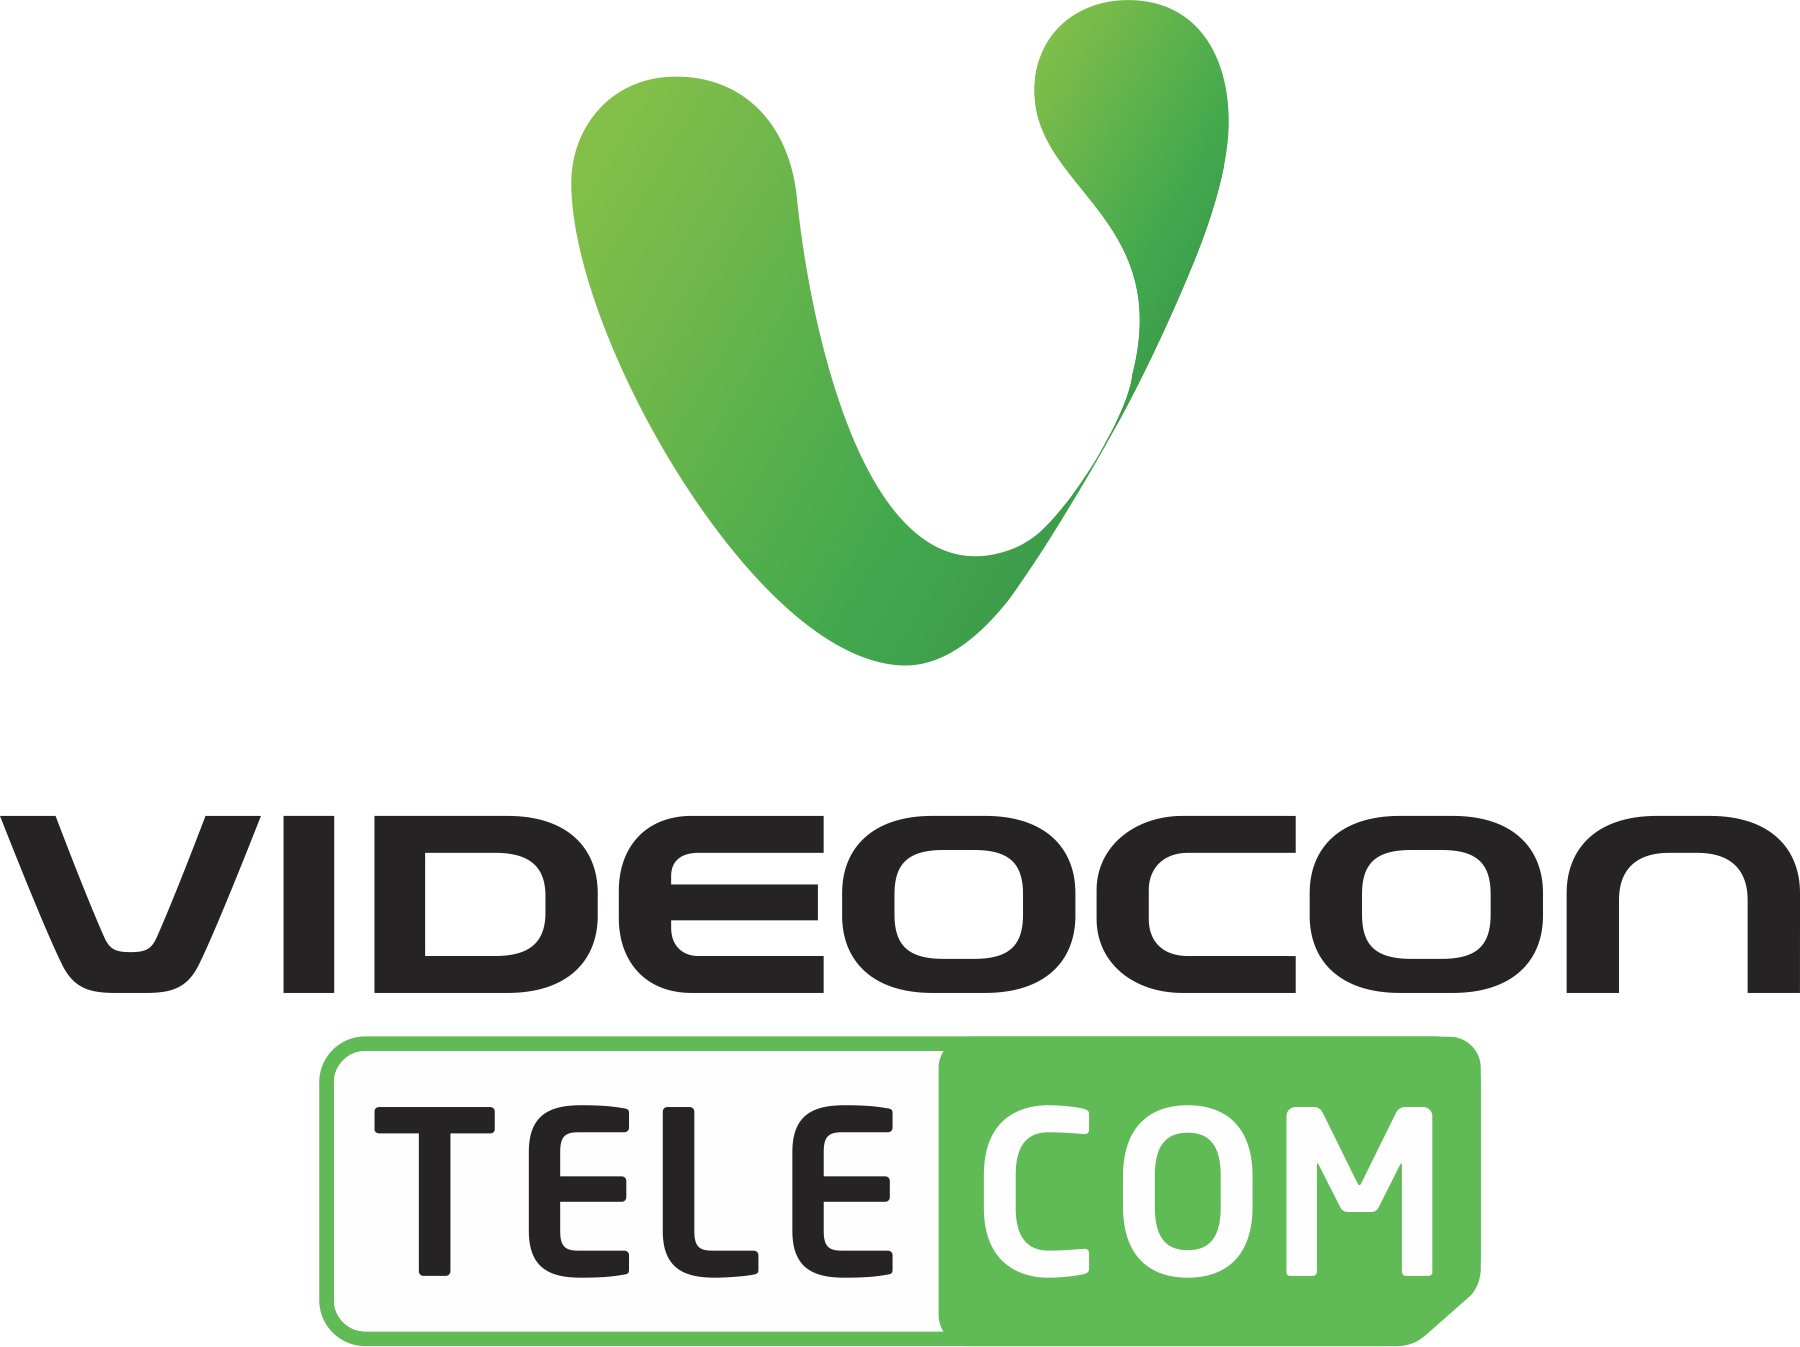 VTL_logo (1)